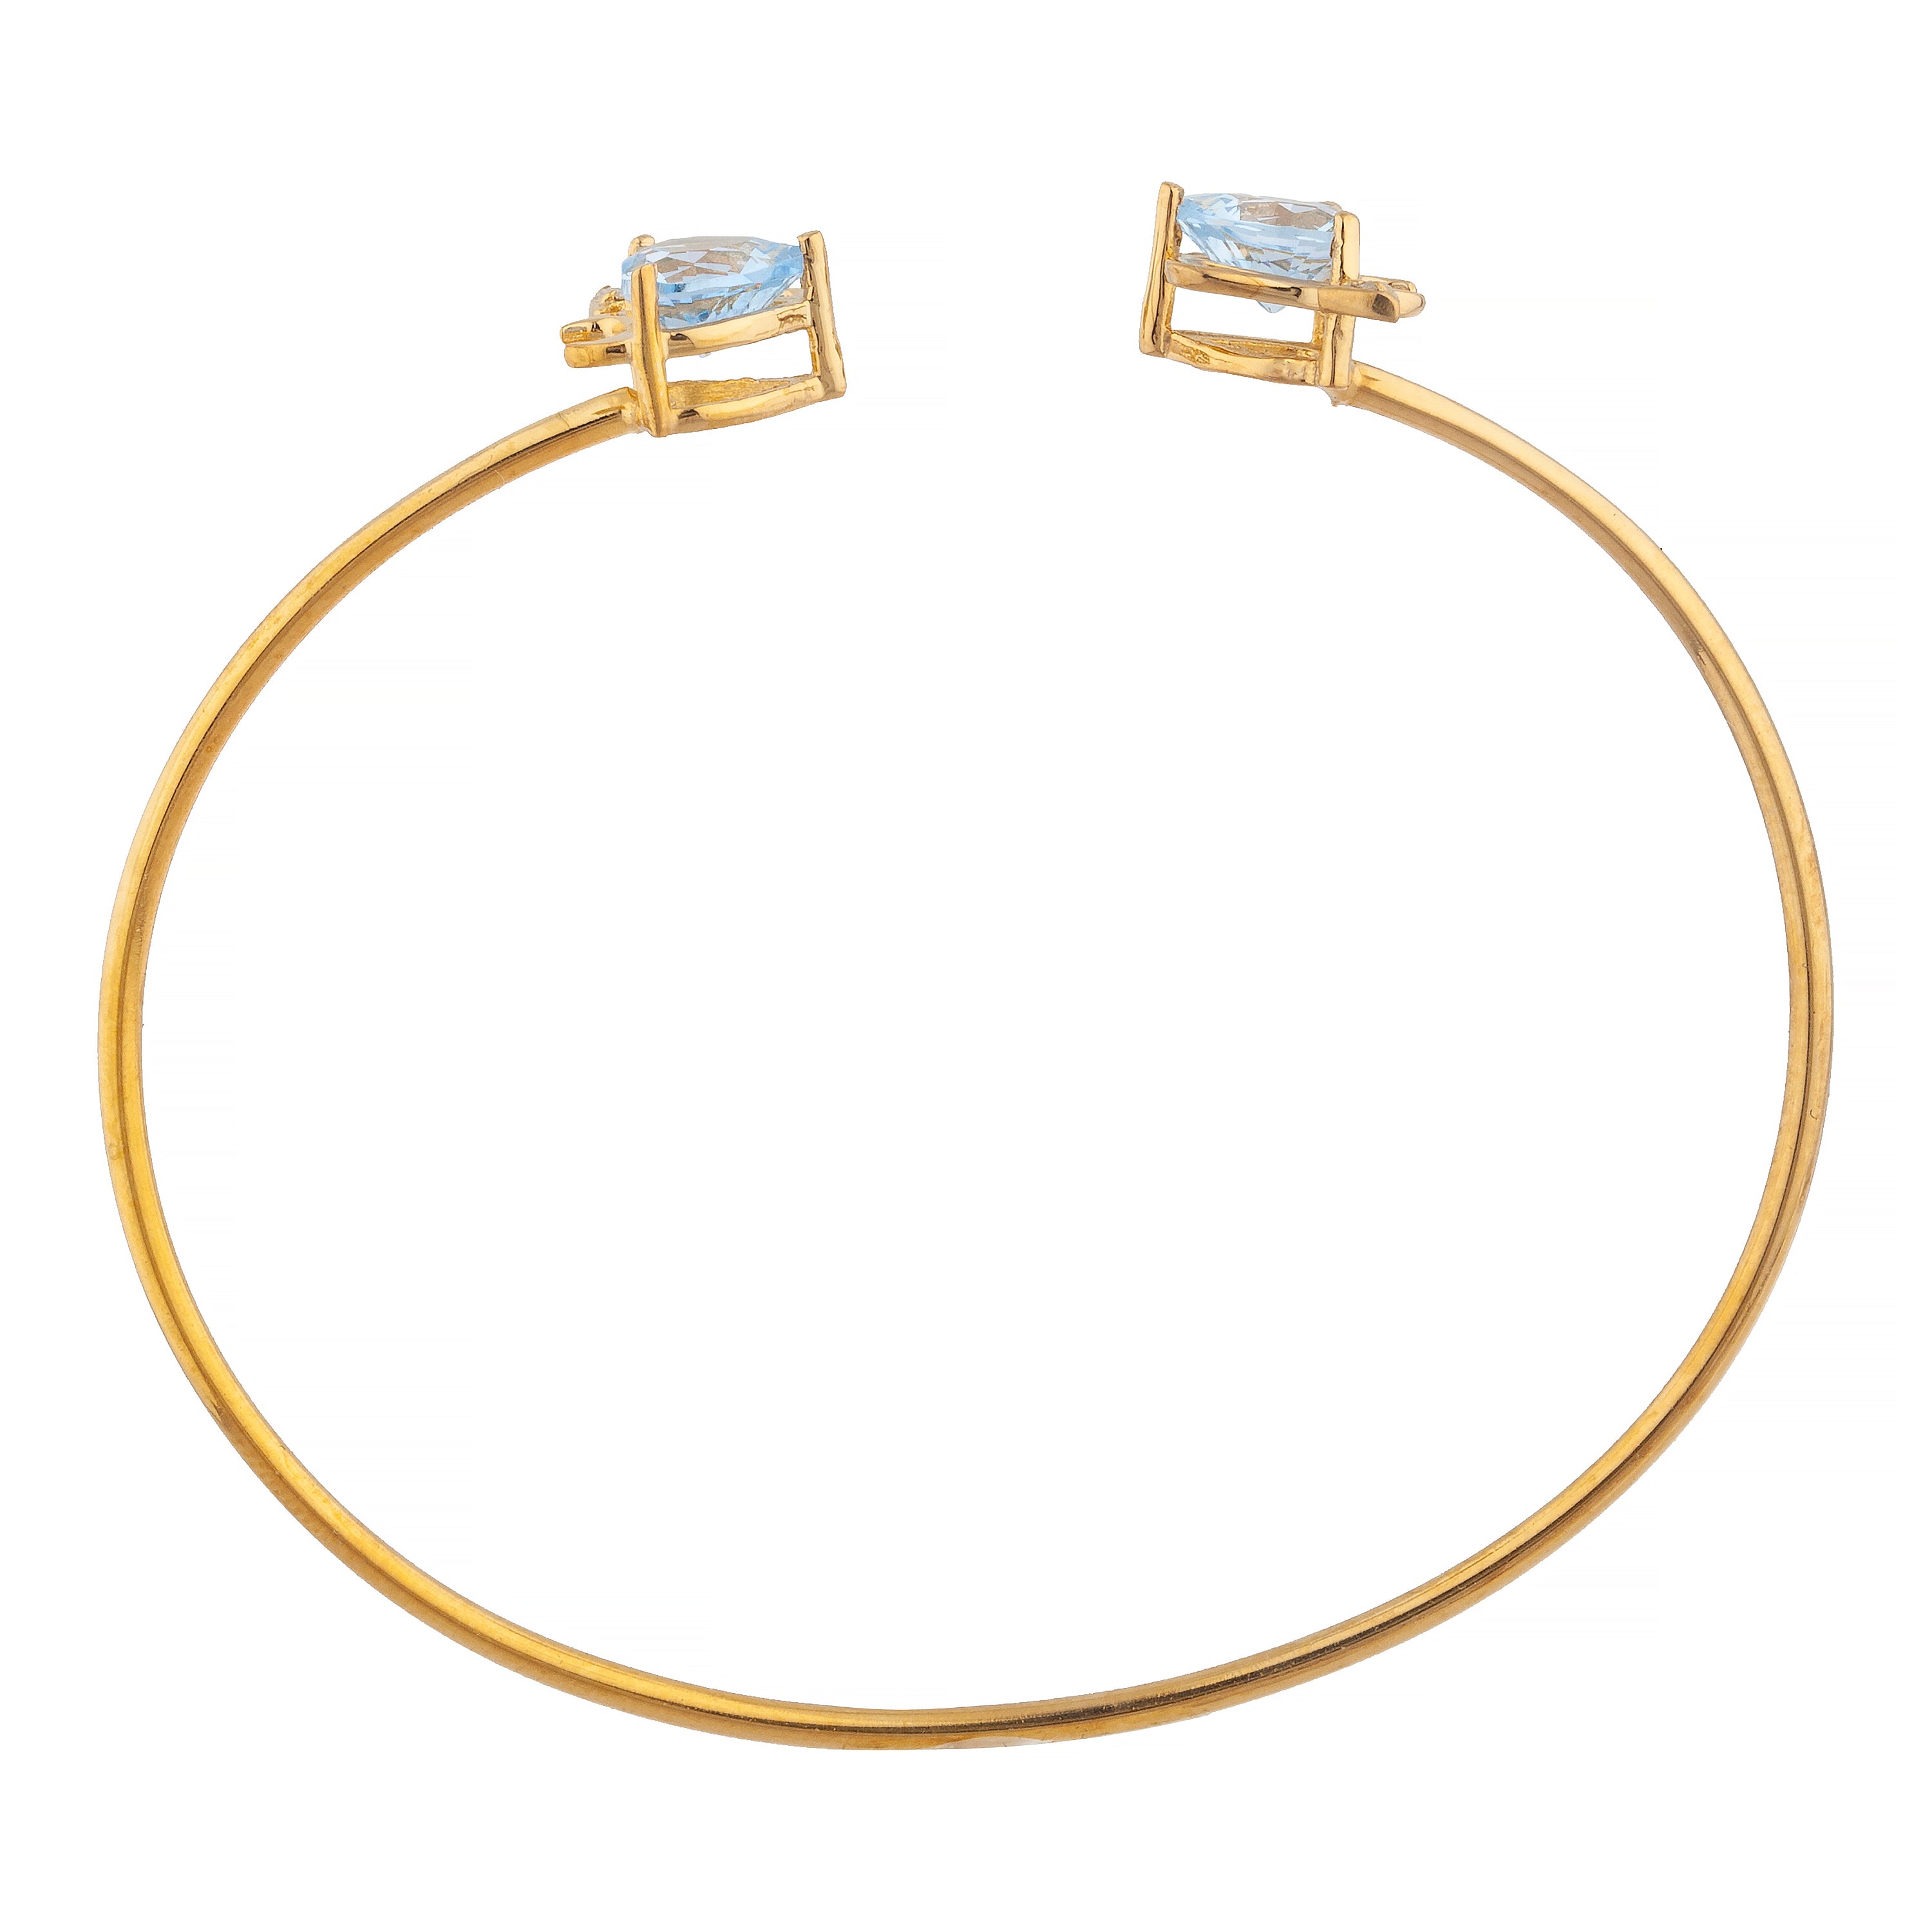 Aquamarine & Diamond Devil Heart Bangle Bracelet 14Kt Yellow Gold Rose Gold Silver